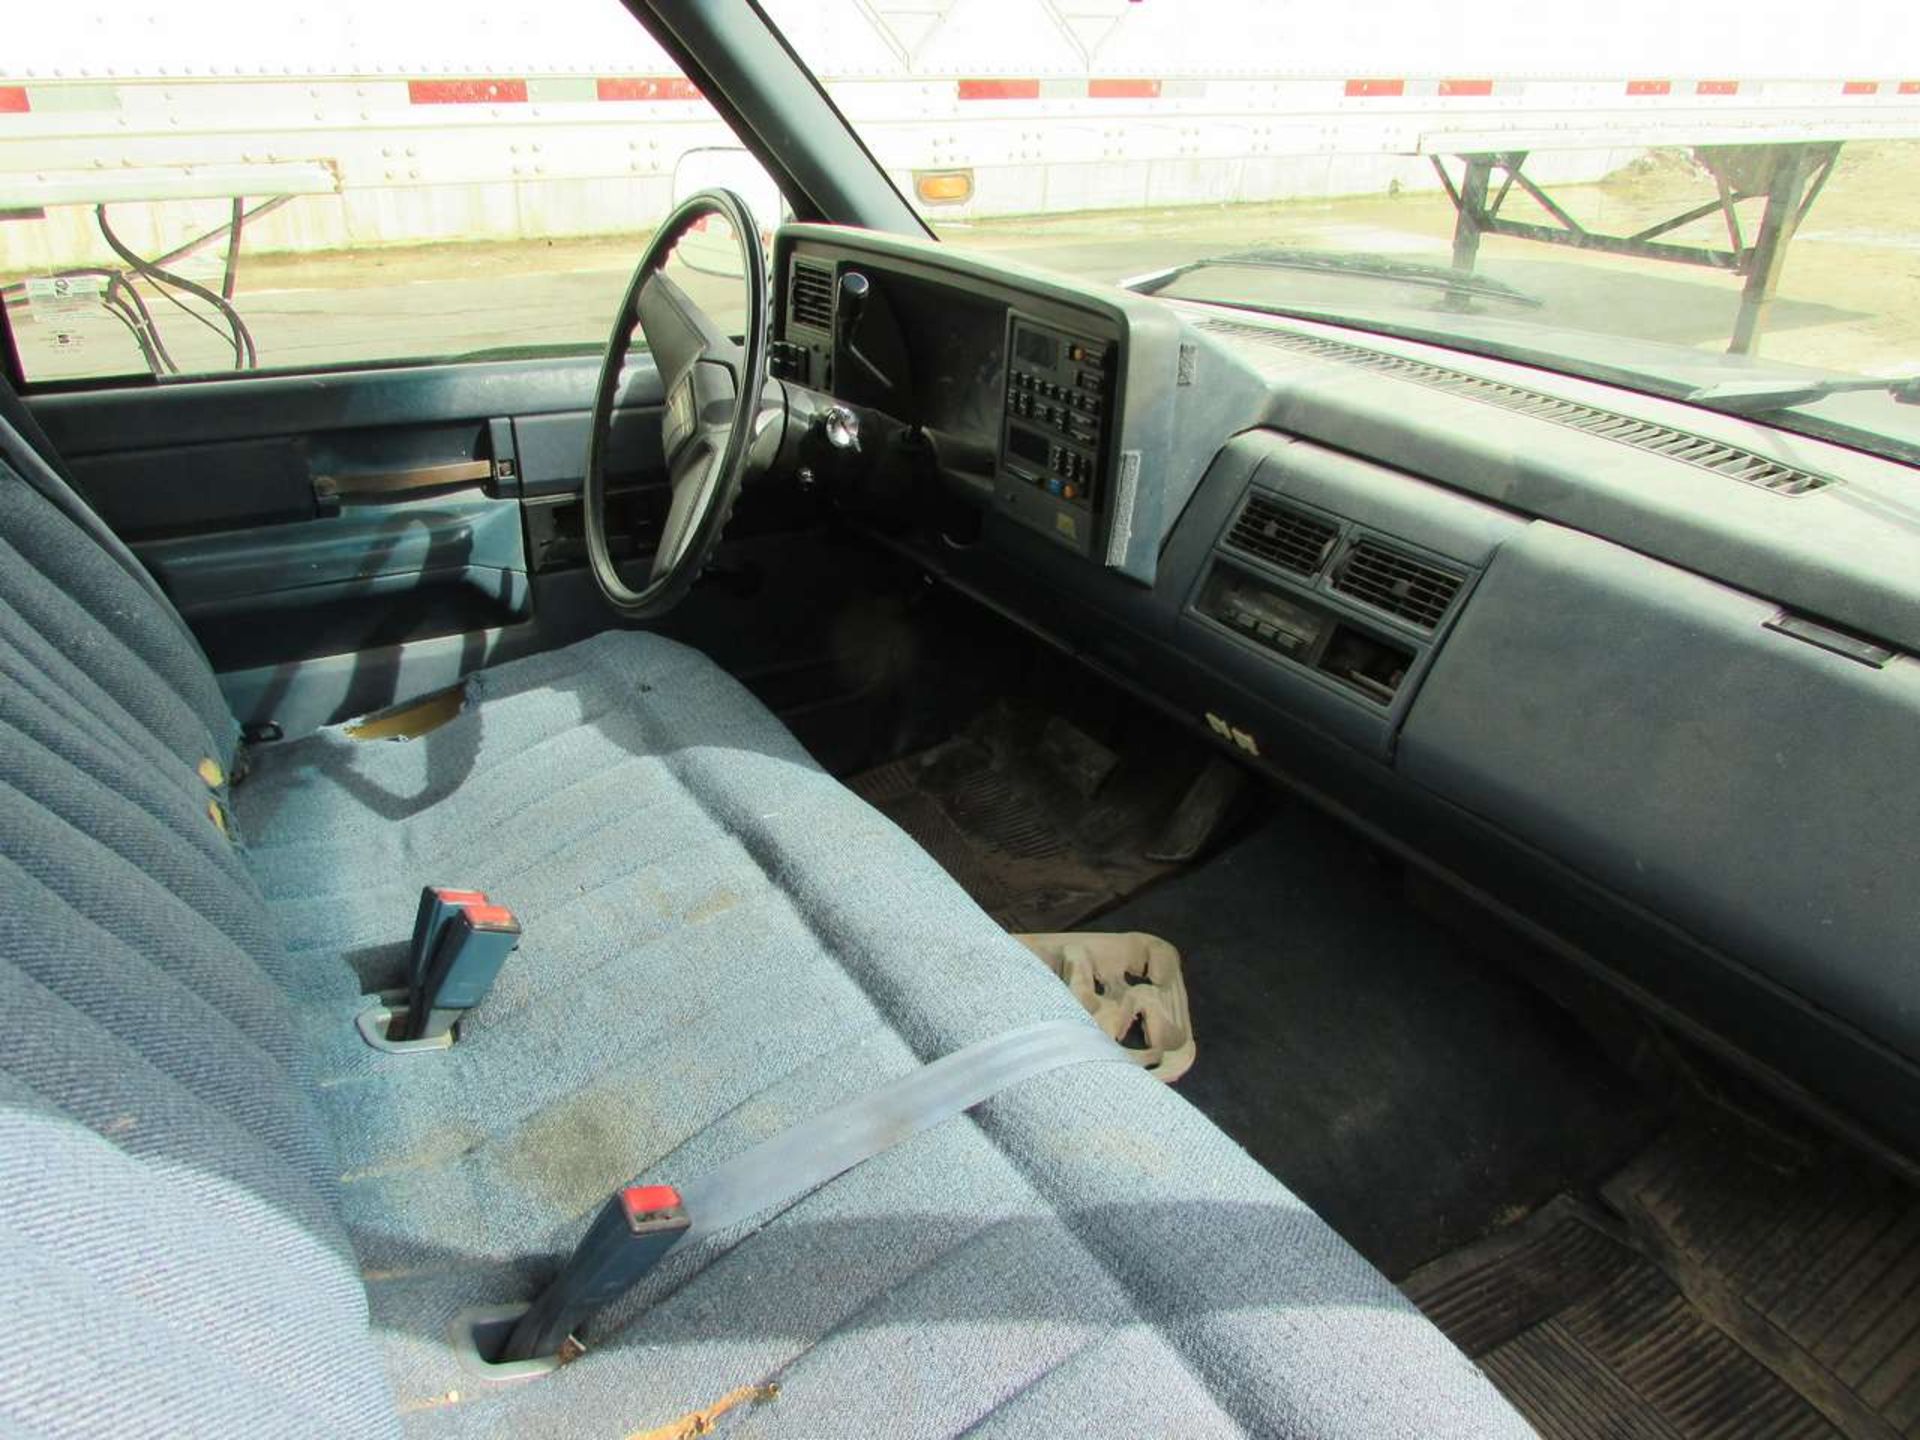 1989 Chevy Silverado Pickup Truck - Image 8 of 9